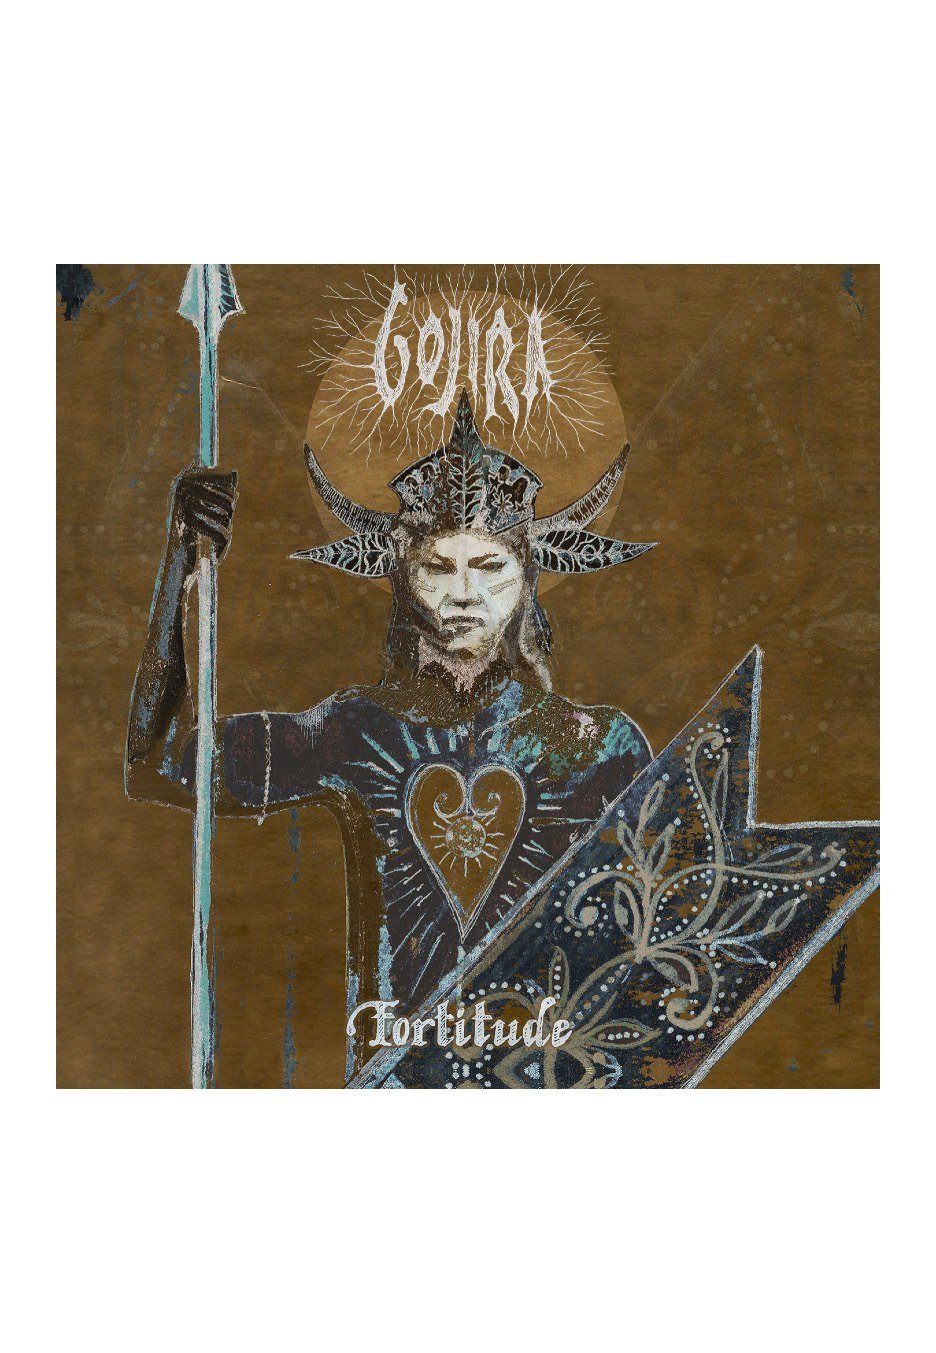 Gojira - Fortitude - CD